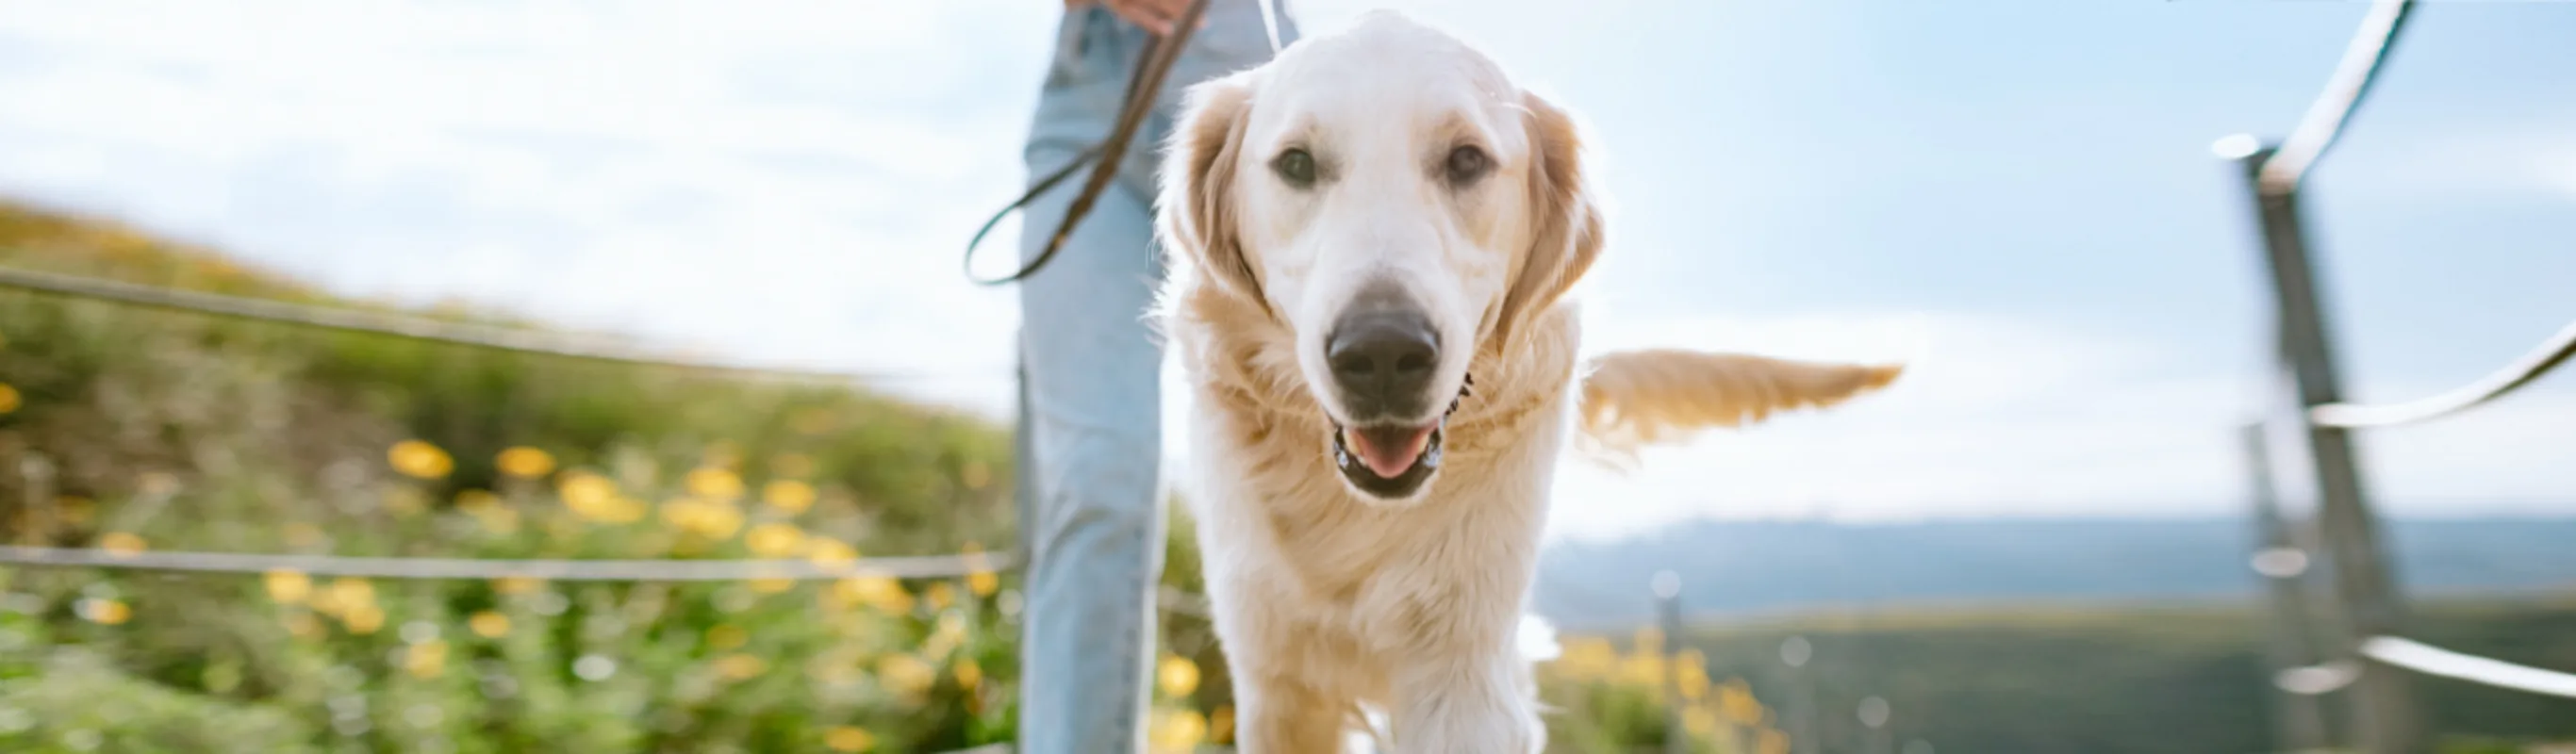 Owner Walking Golden Retriever (Dog) Outdoors